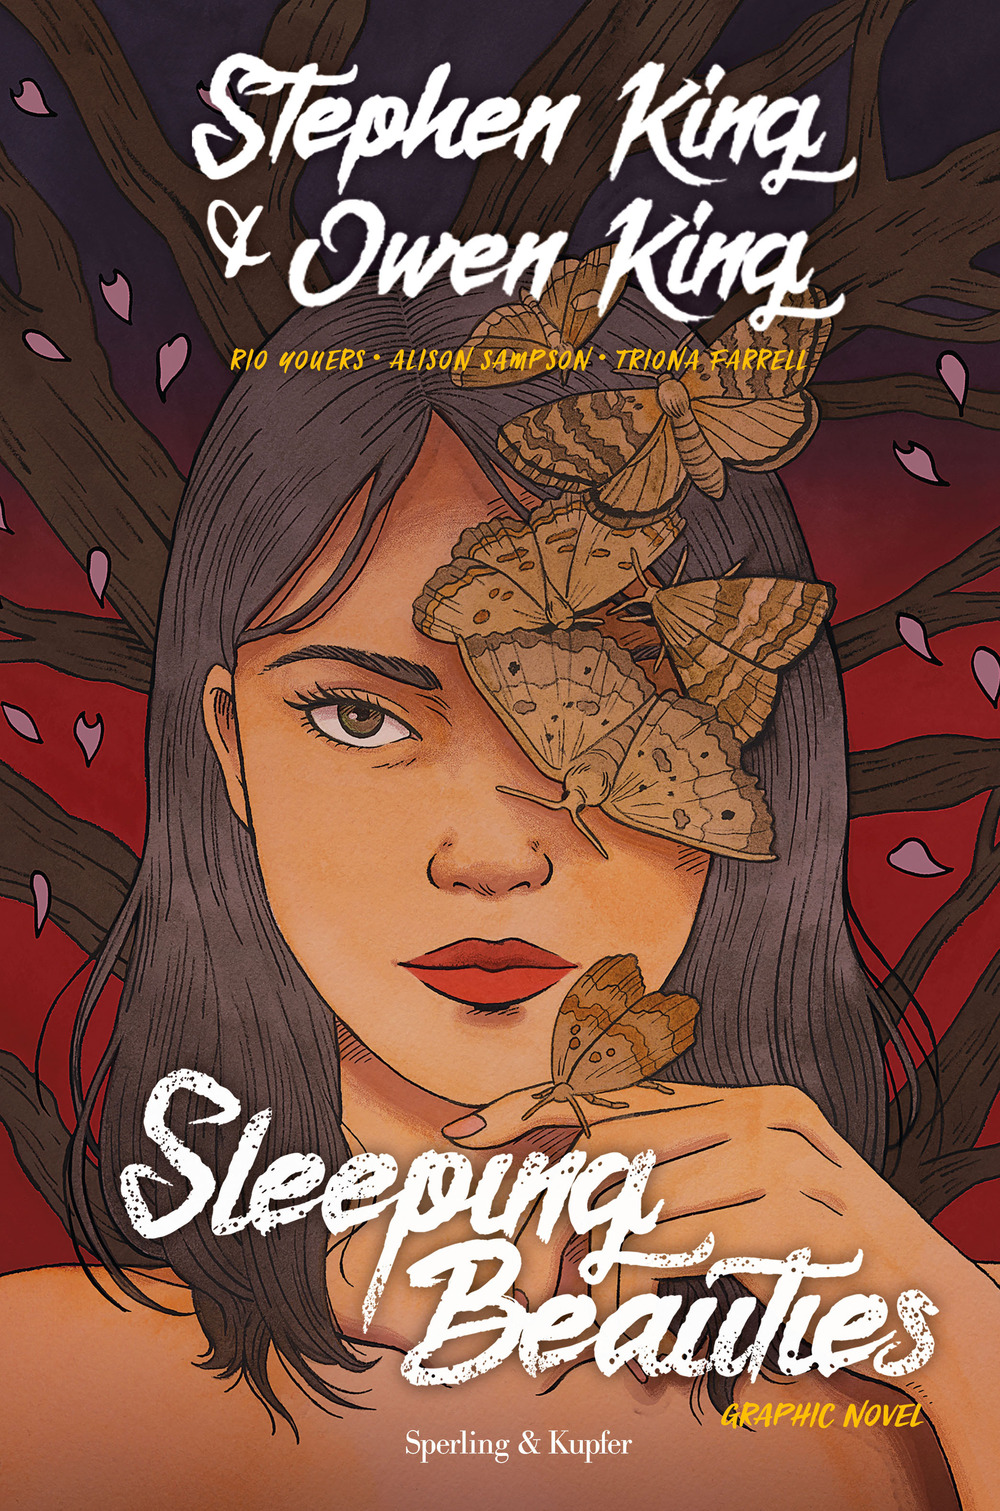 Sleeping beauties. Graphic novel